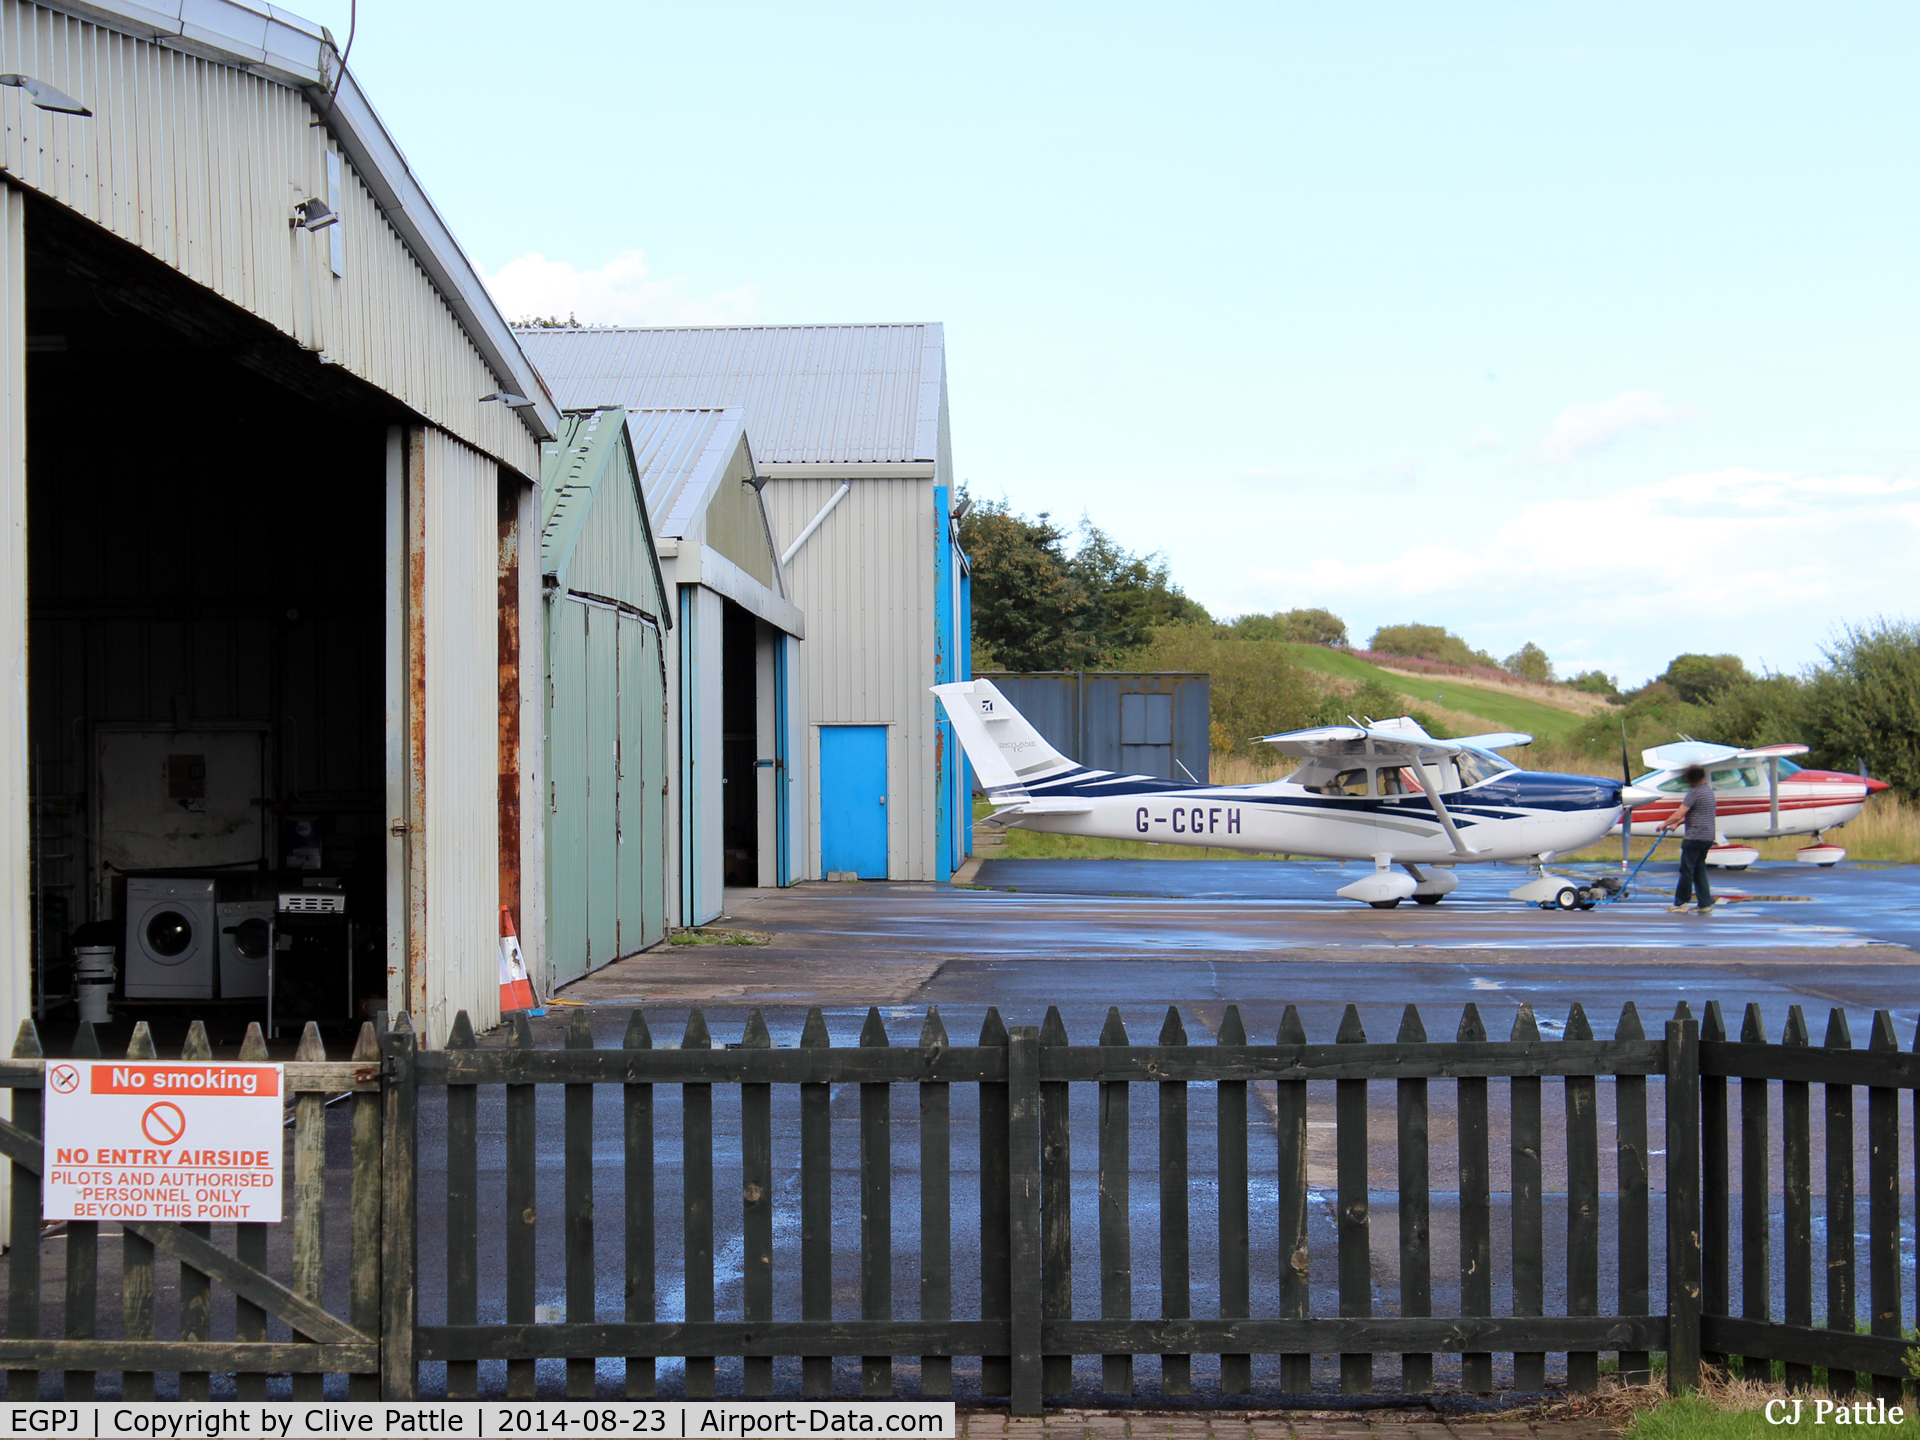 Fife Airport, Glenrothes, Scotland United Kingdom (EGPJ) - The hangar apron at Glenrothes EGPJ